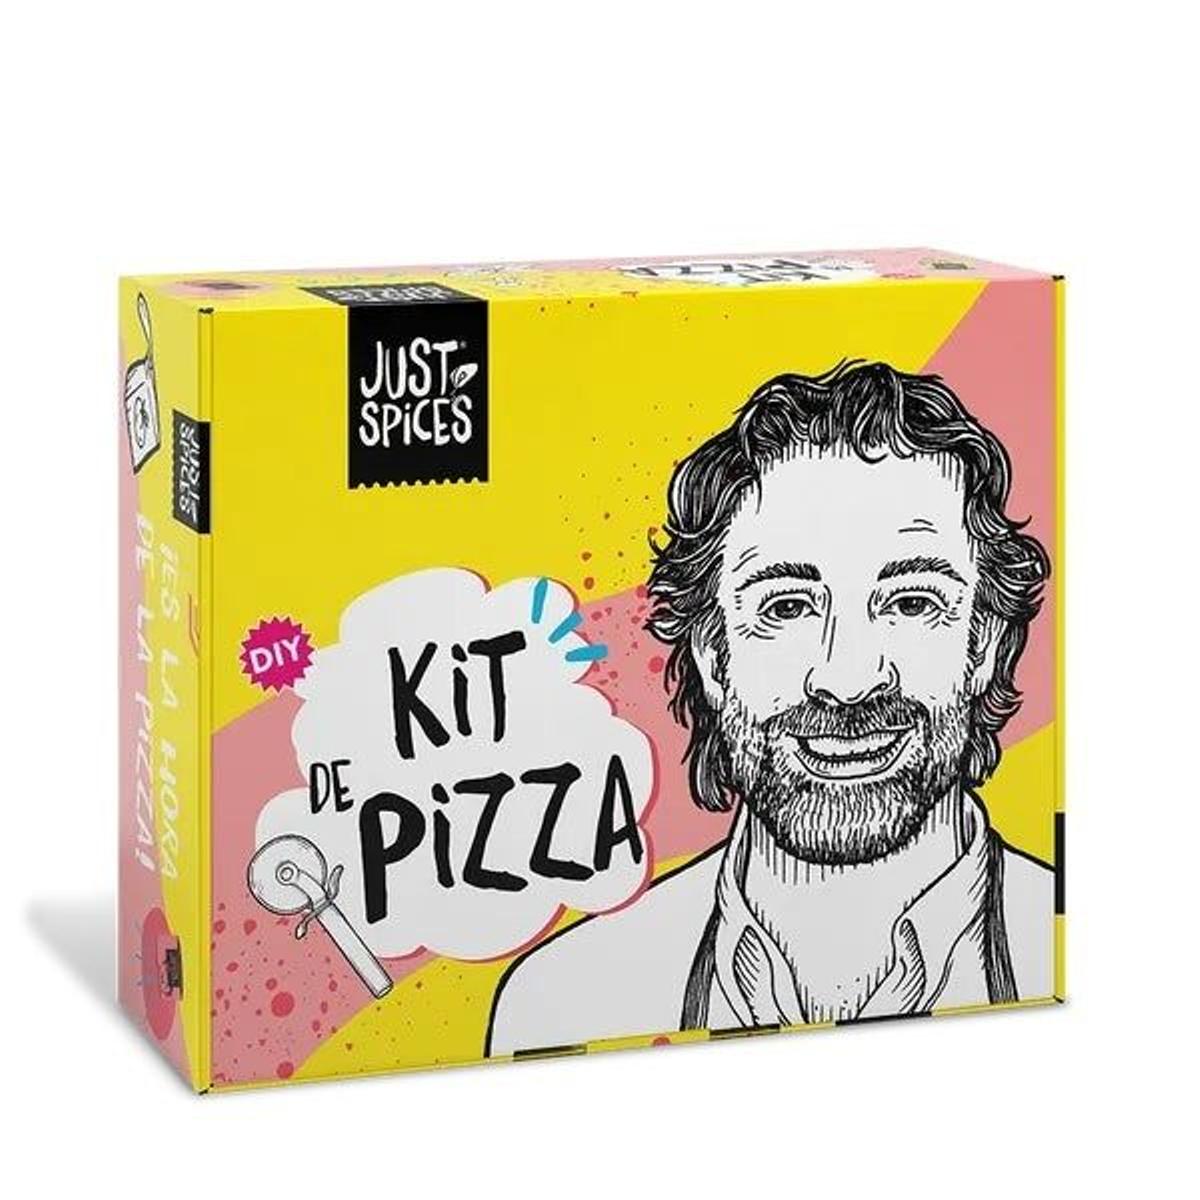 Kit de pizza DIY